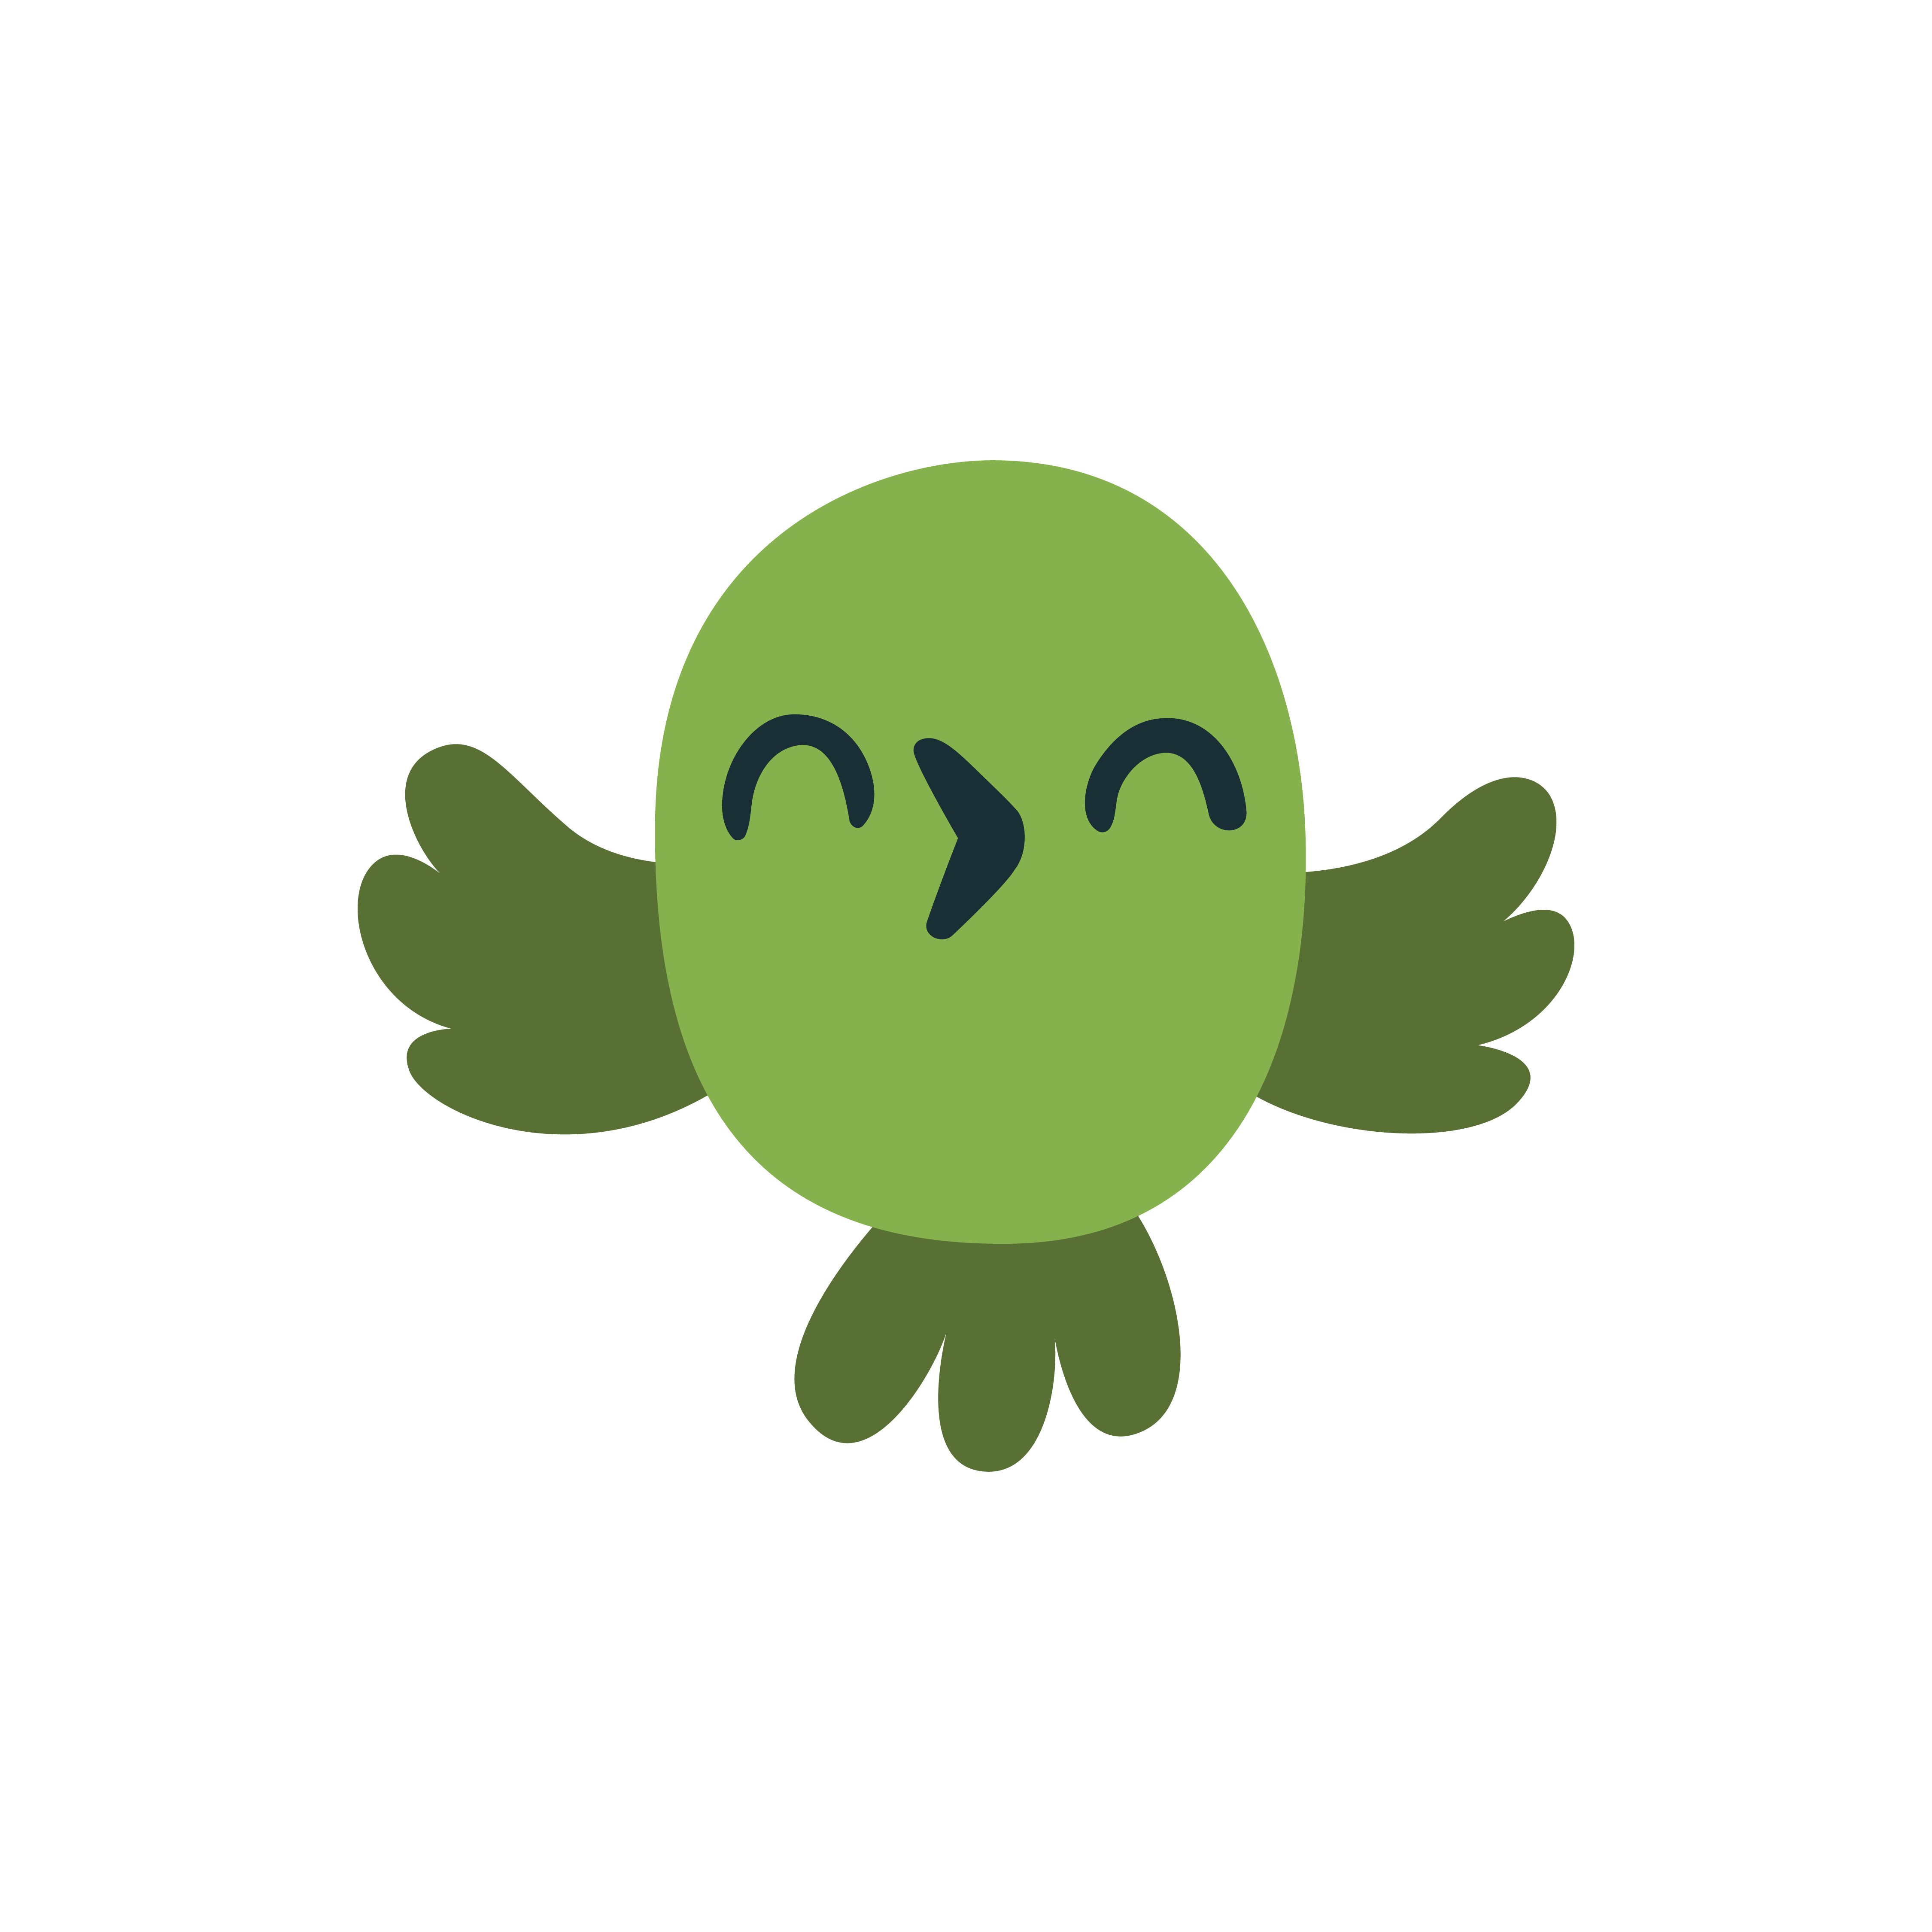 A green smiling bird